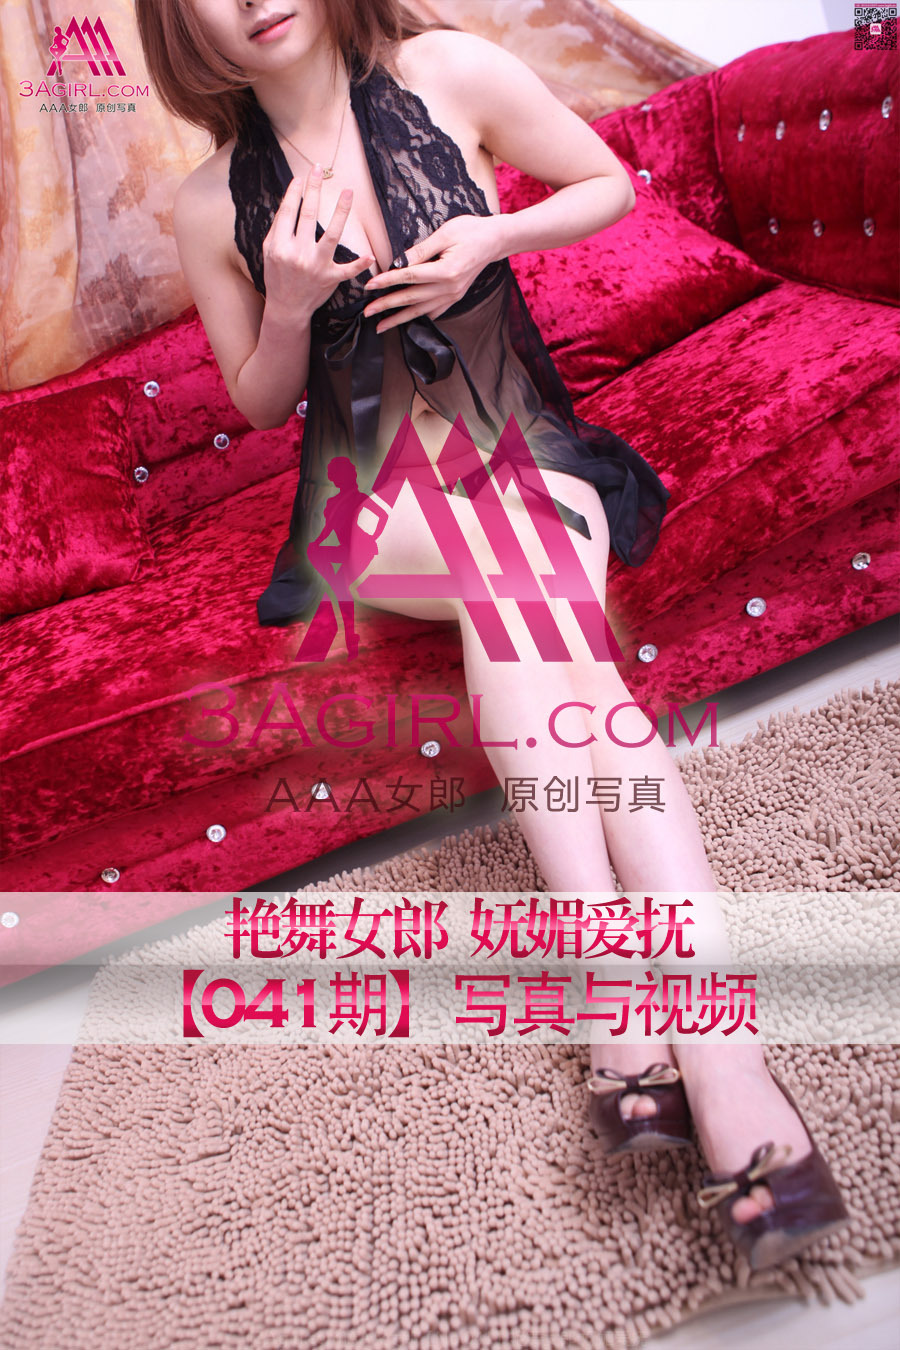 [3agirl] 2013.08.01 AAA domestic silk stockings girl aesthetic photo no.041